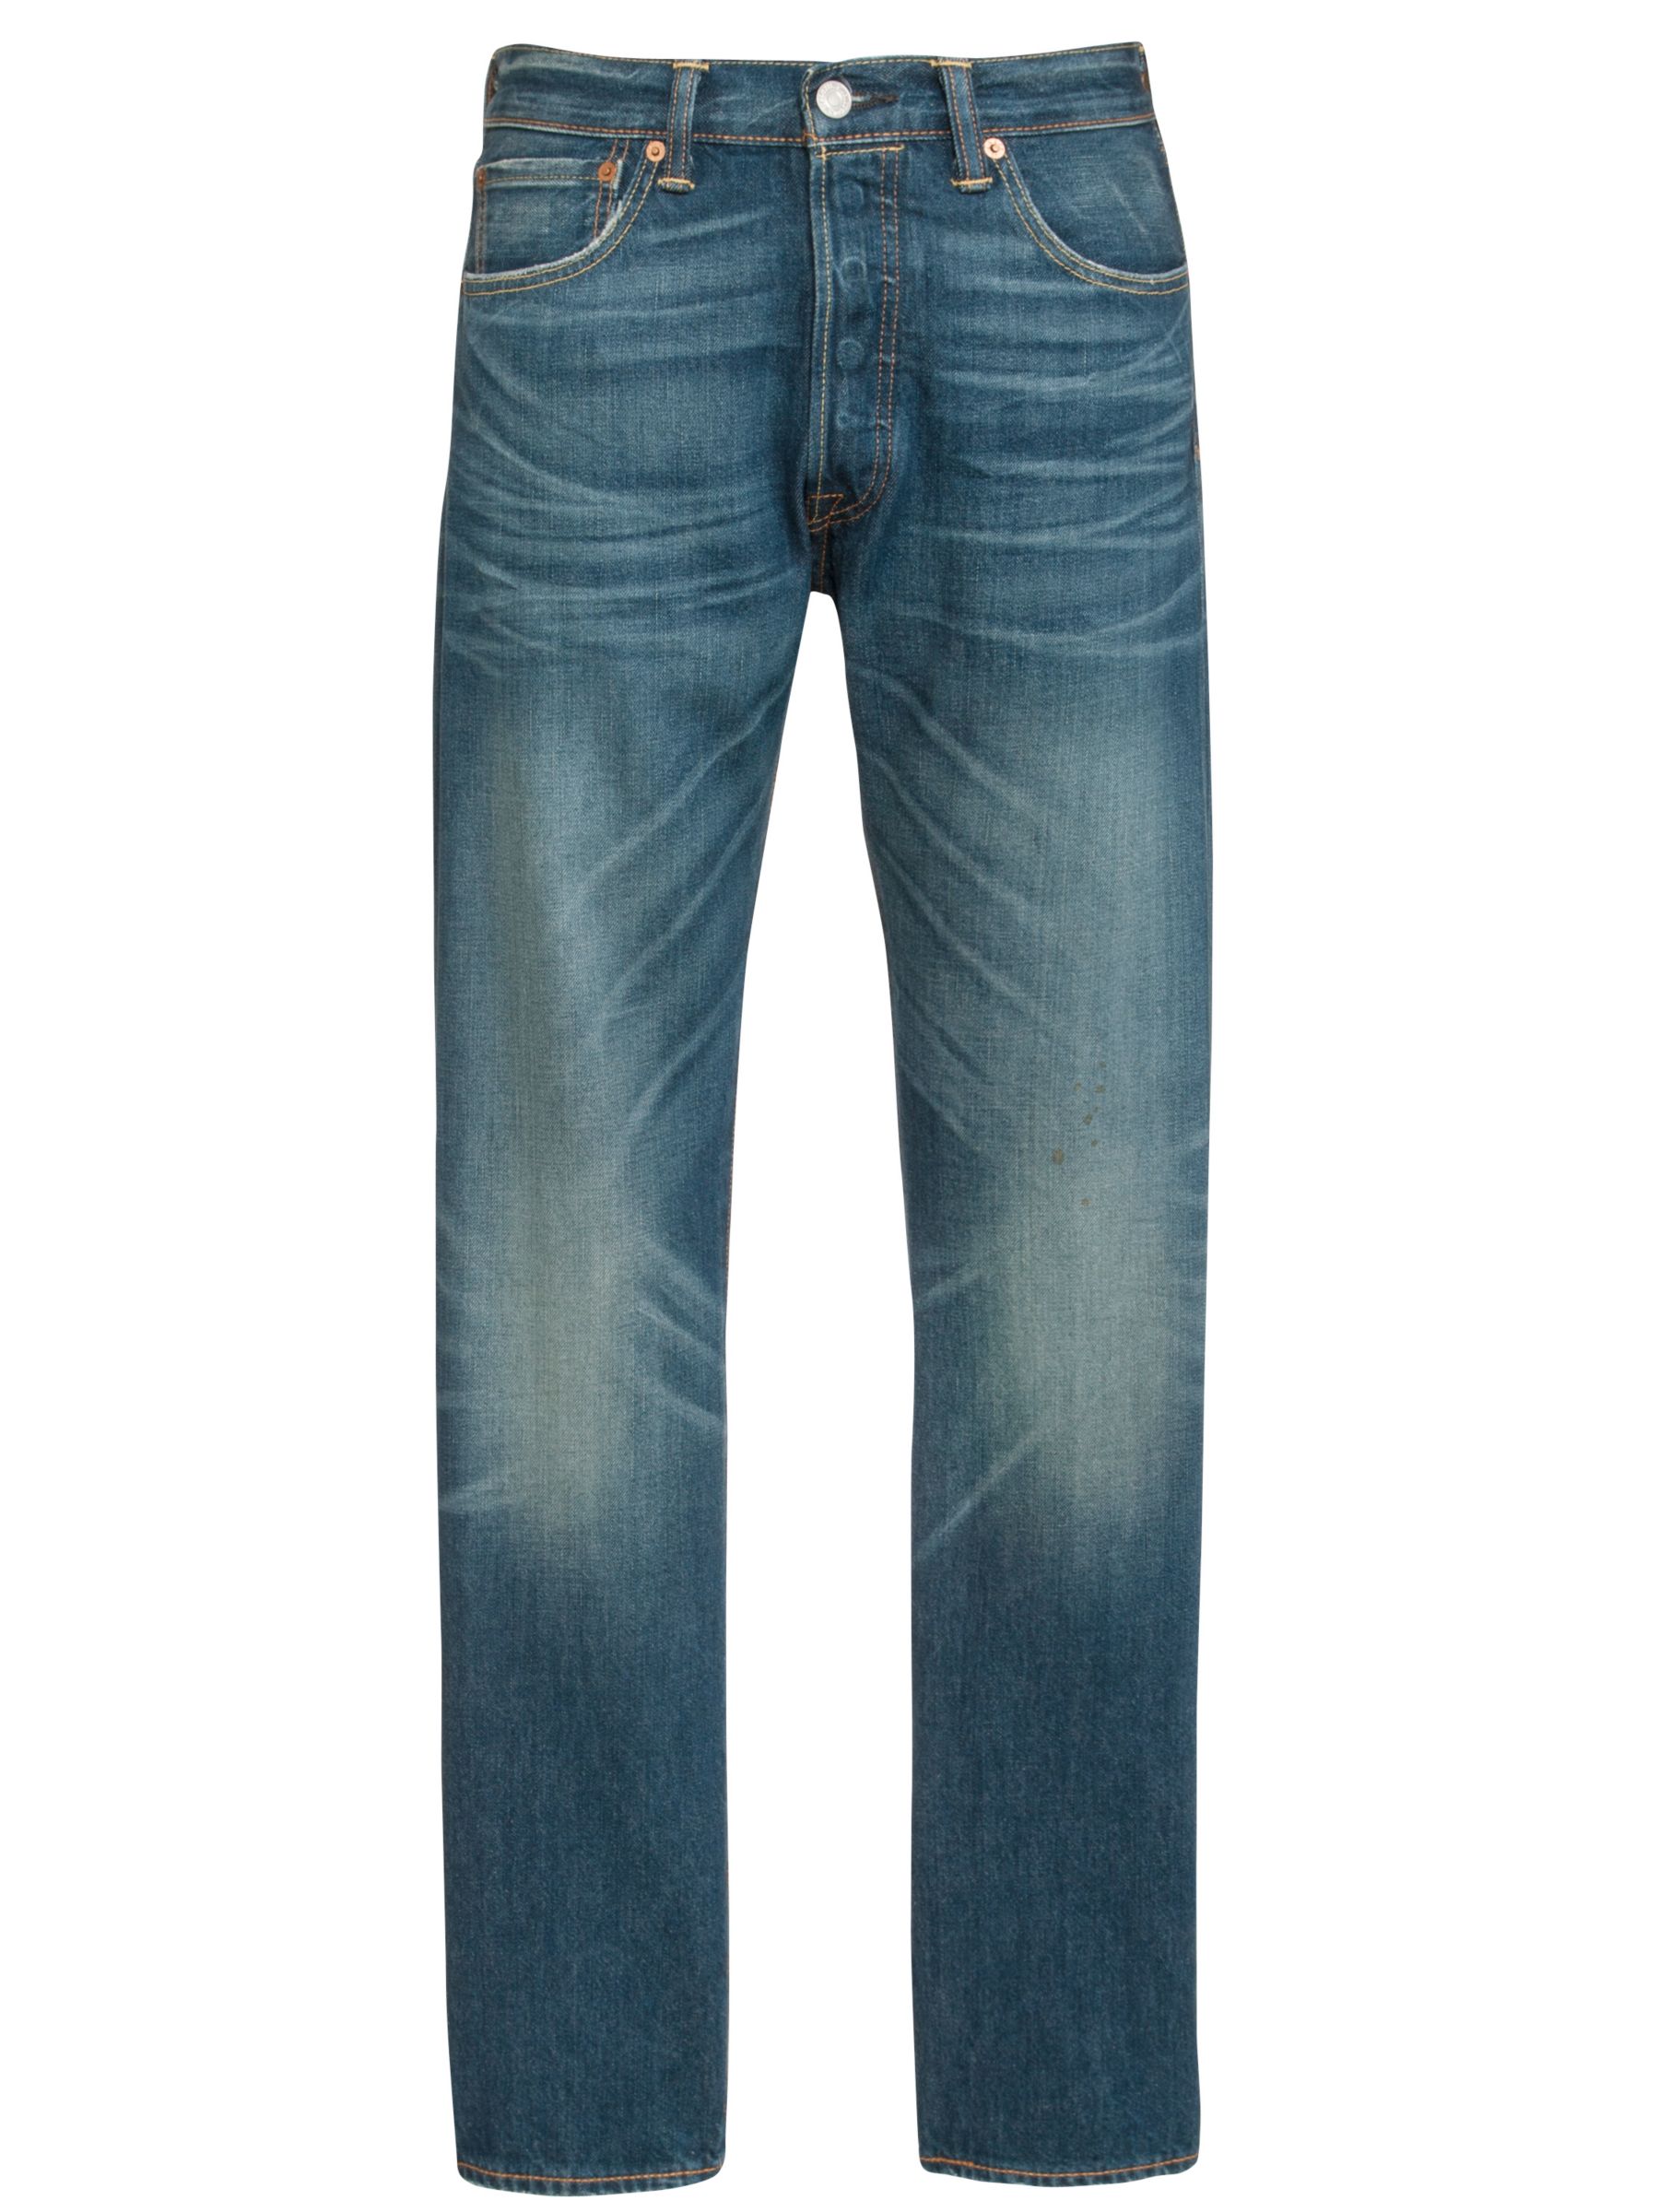 Levi's 501 Original Straight Jeans at 